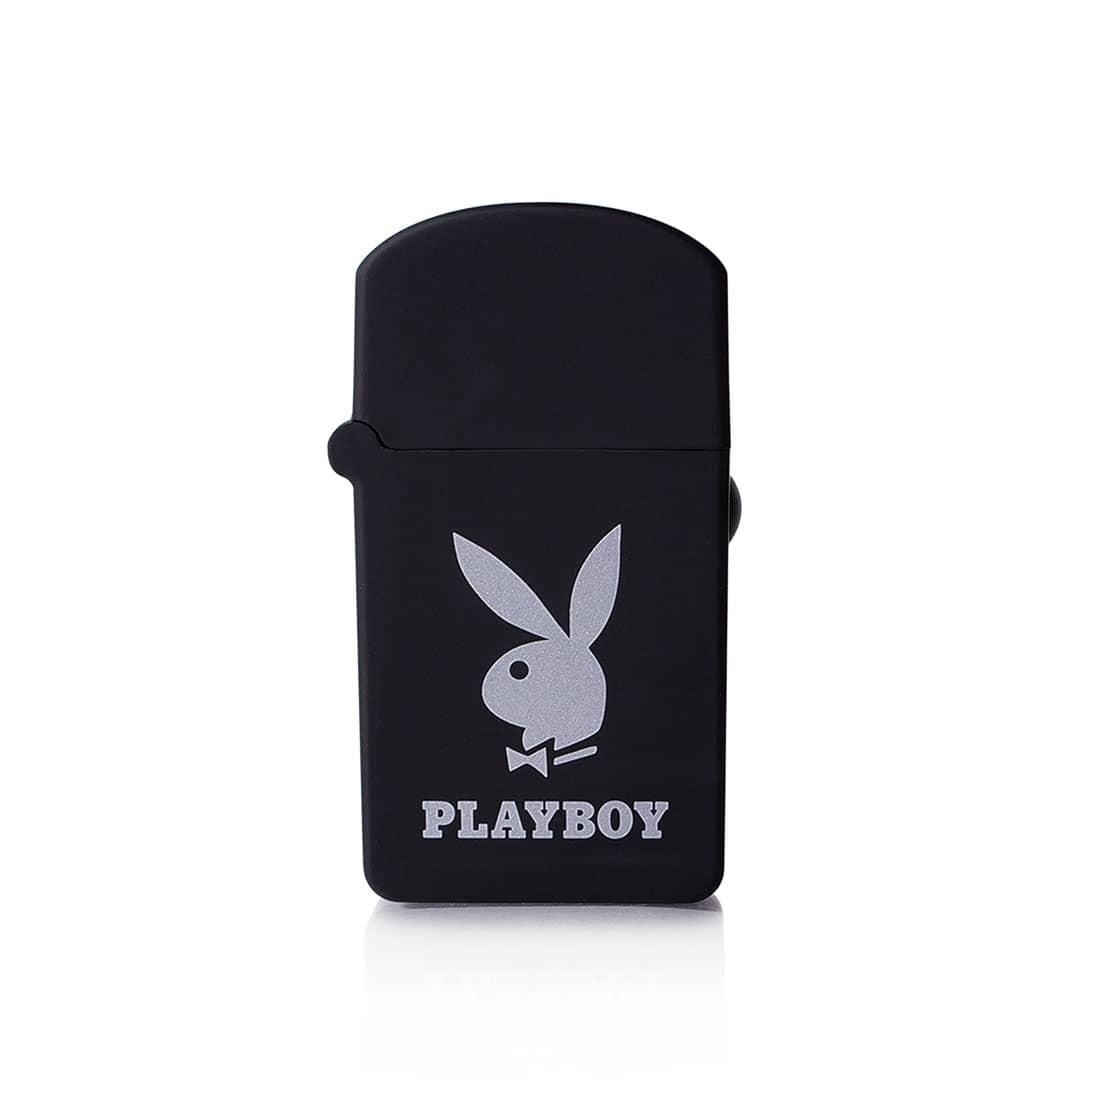 Playboy RYOT Verb 510 Battery Bunny Head